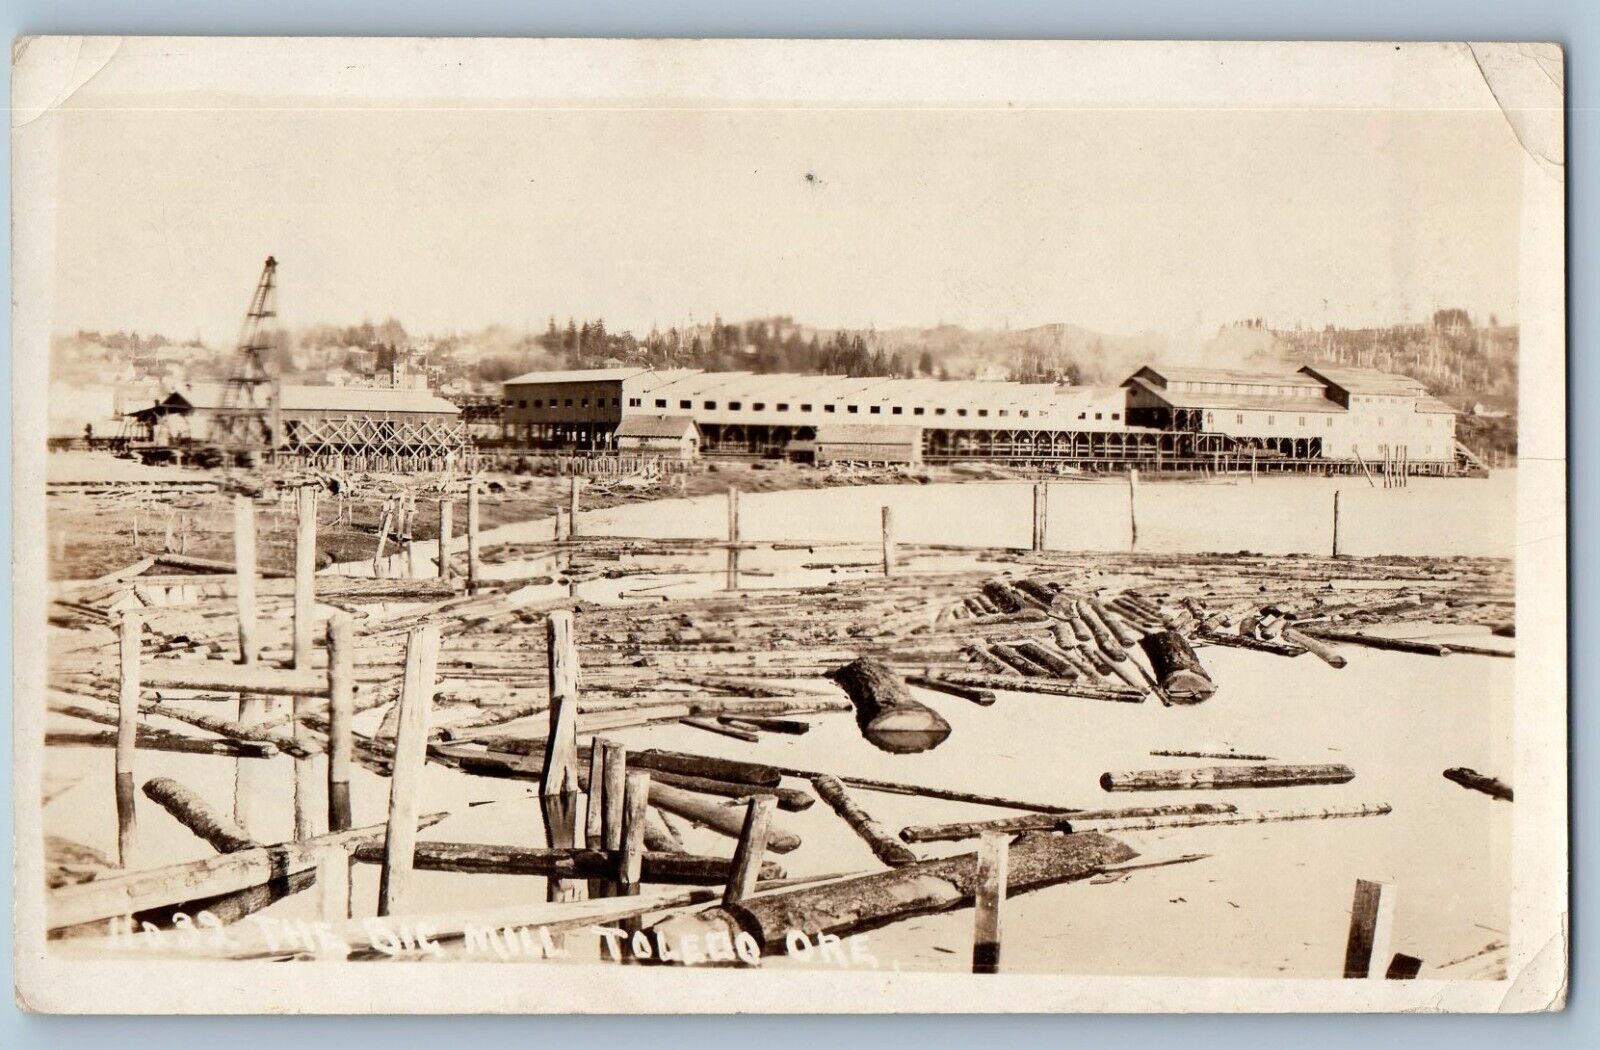 Toledo Oregon OR Postcard RPPC Photo The Big Mill Logs c1910's Unposted Antique